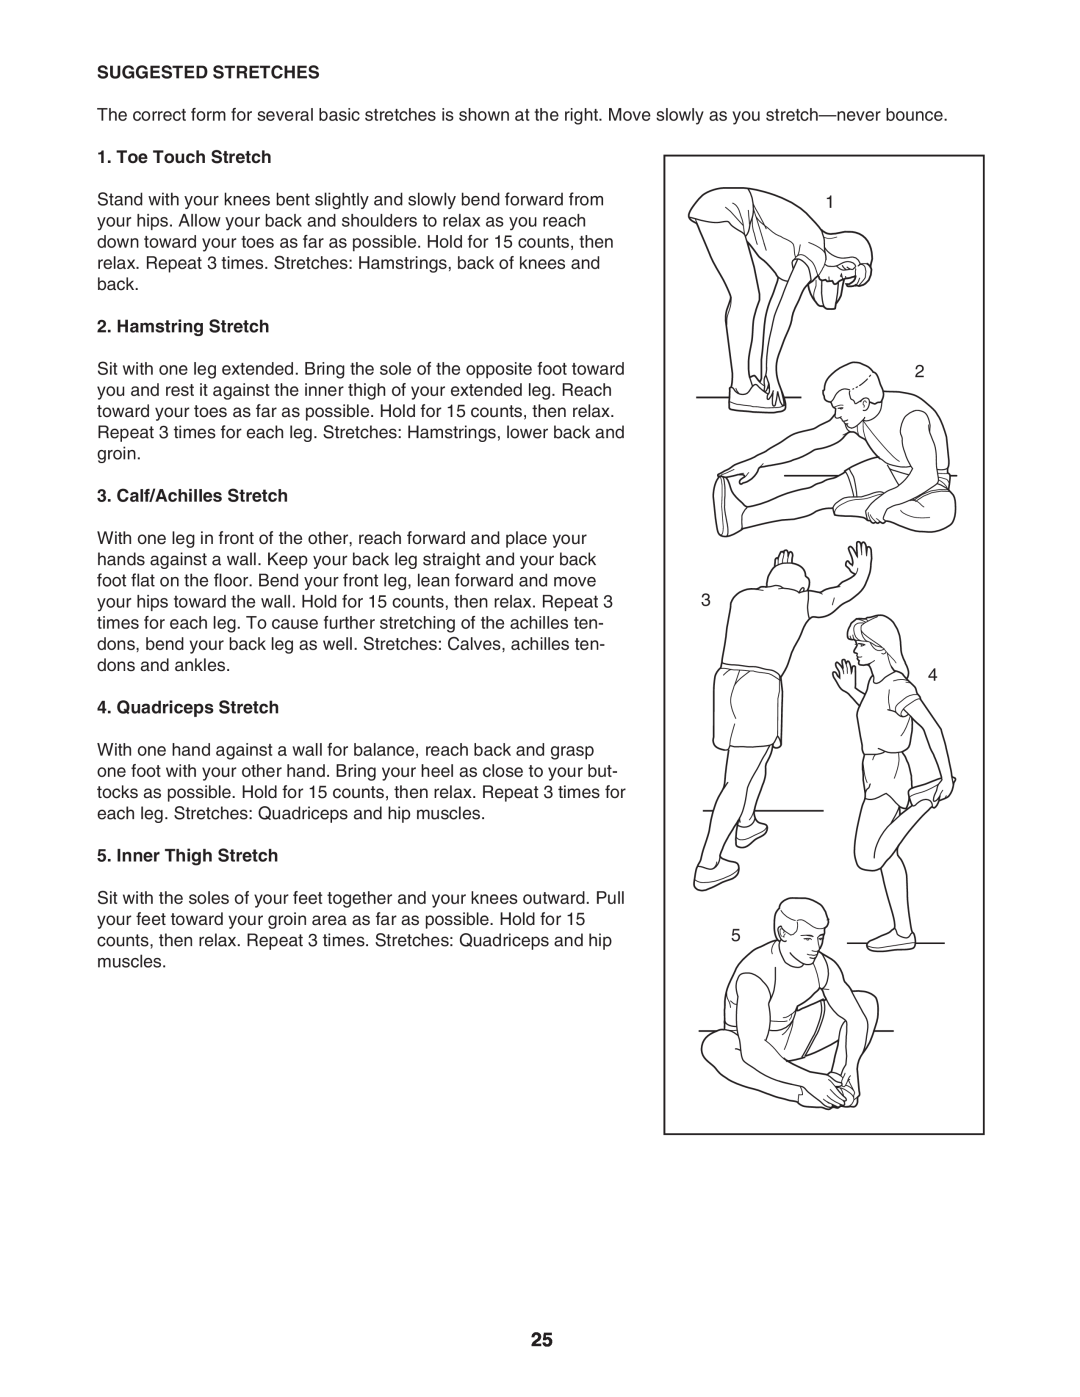 ProForm 831.29675.0 Suggested Stretches, Toe Touch Stretch, Hamstring Stretch, Calf/Achilles Stretch, Quadriceps Stretch 